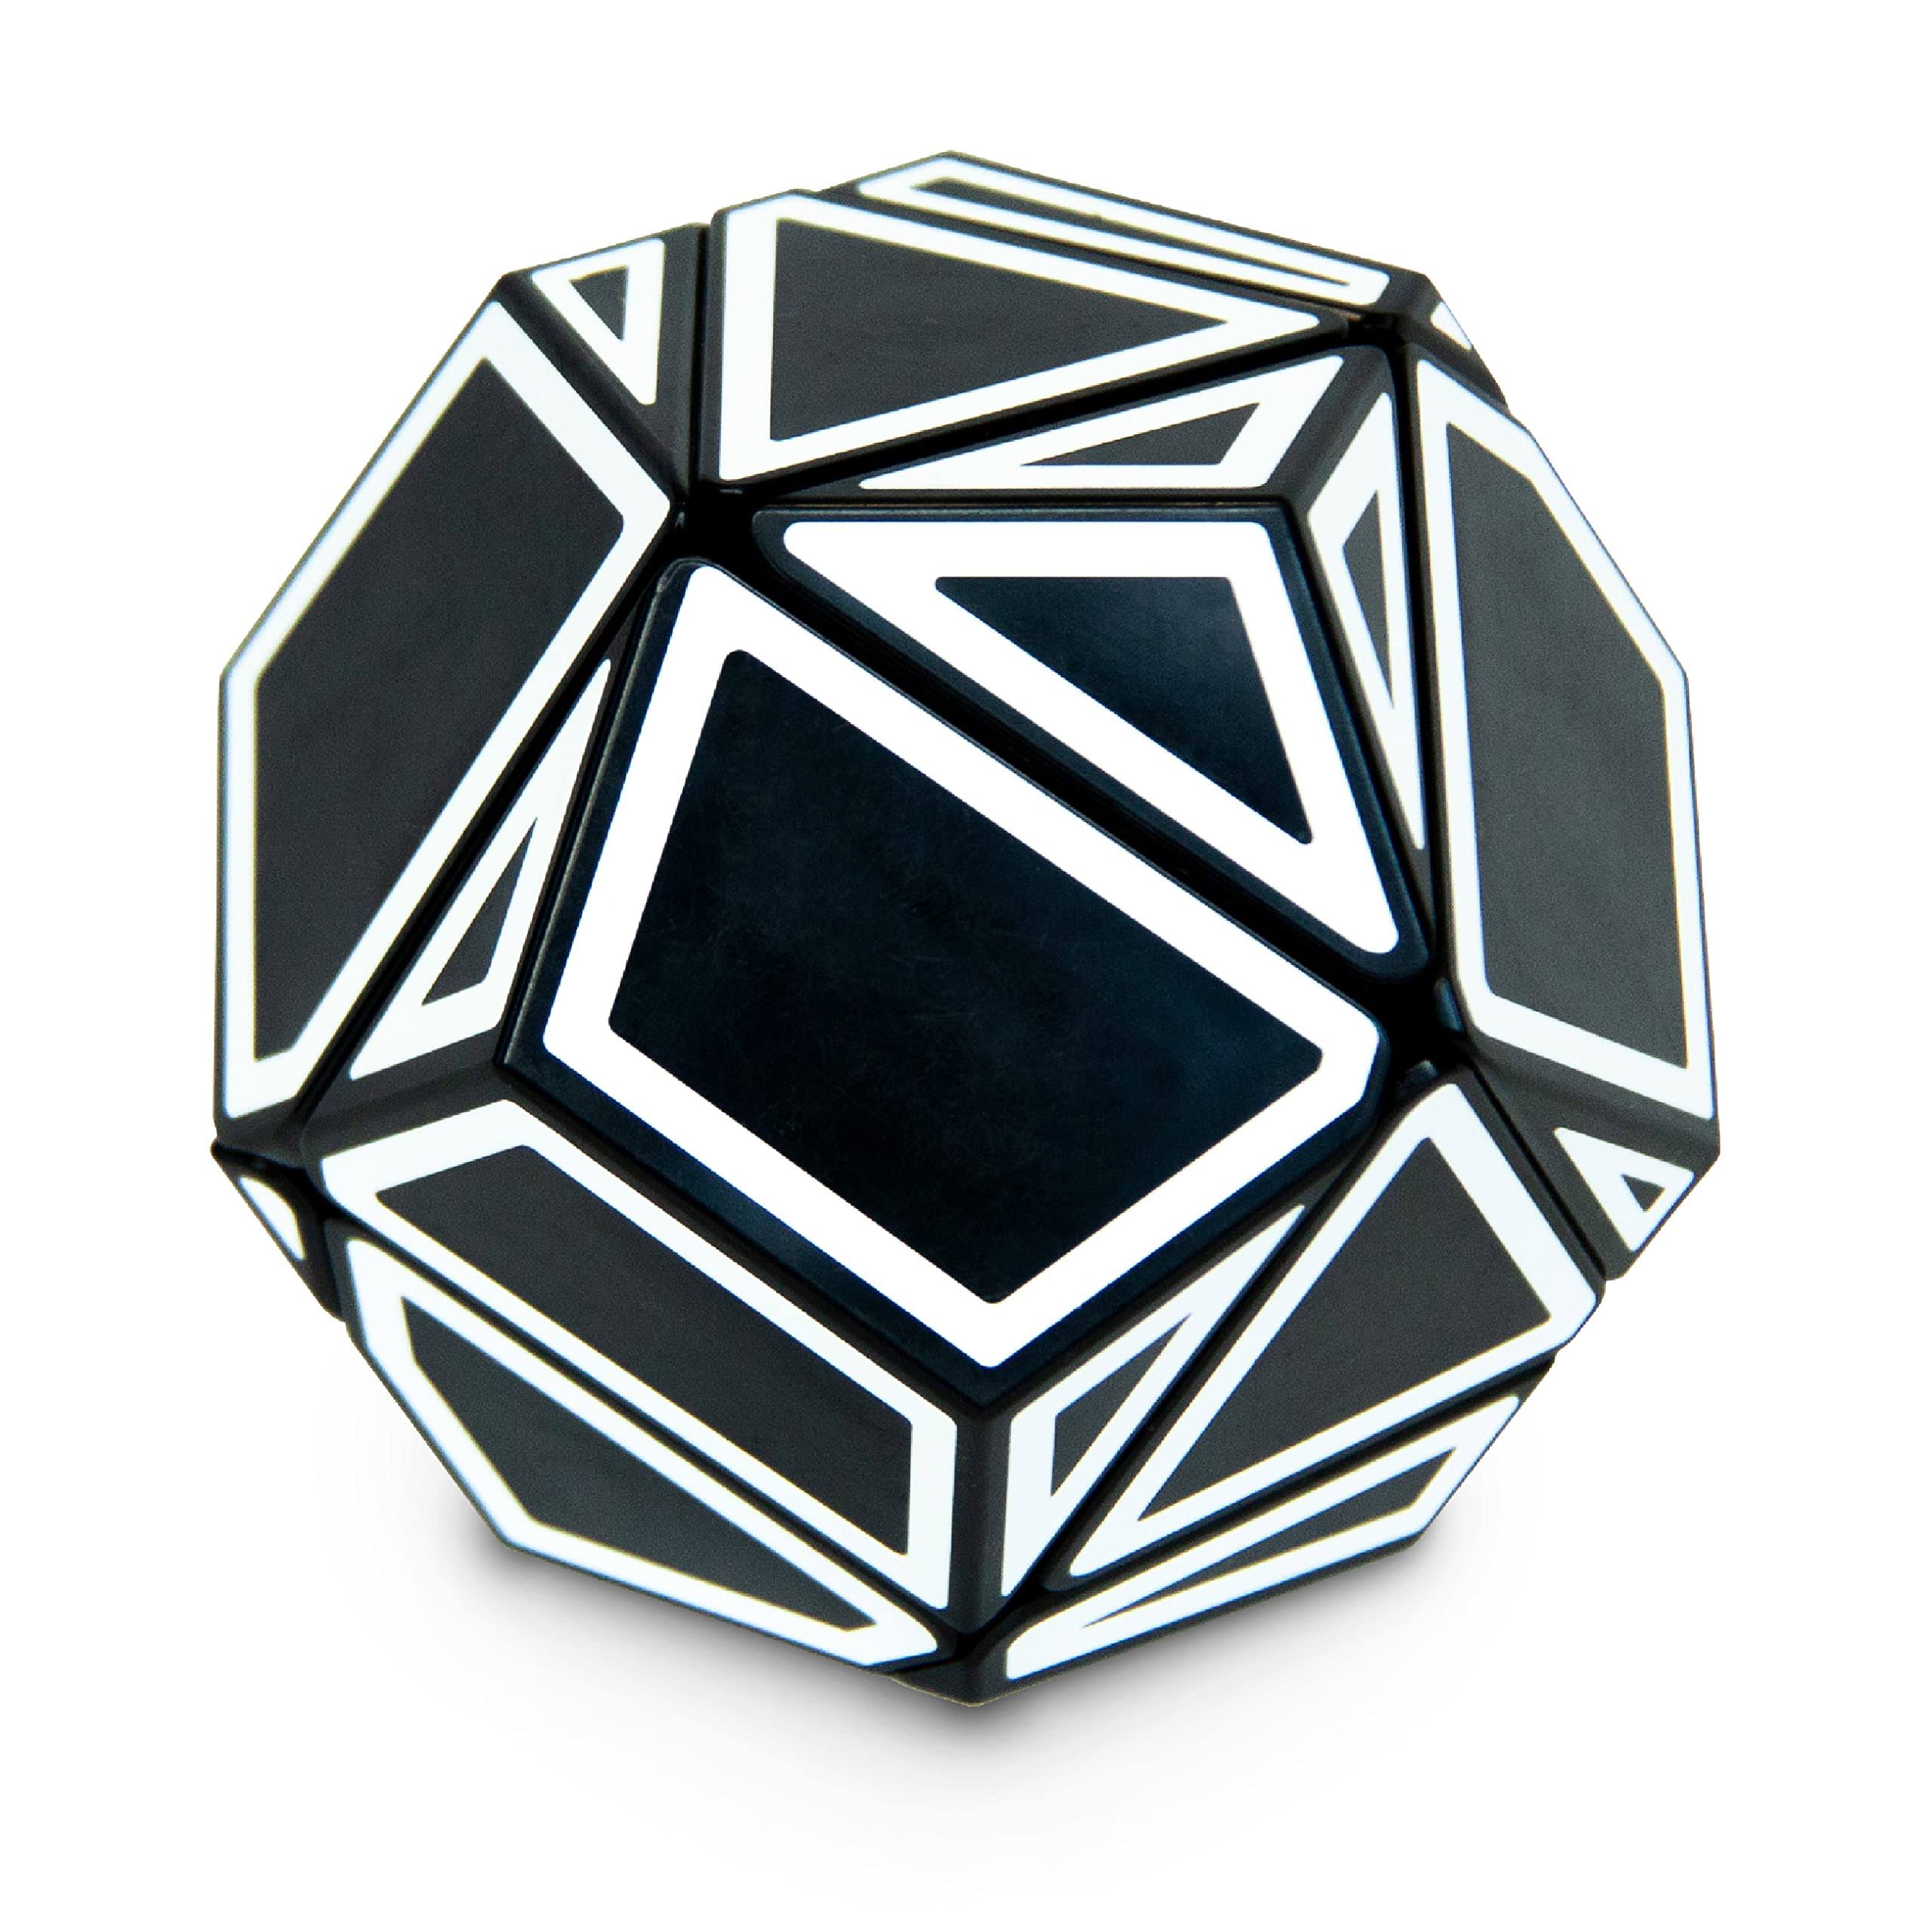 Project Genius Meffert's Ghost Cube Xtreme Puzzle Brainteaser 39284